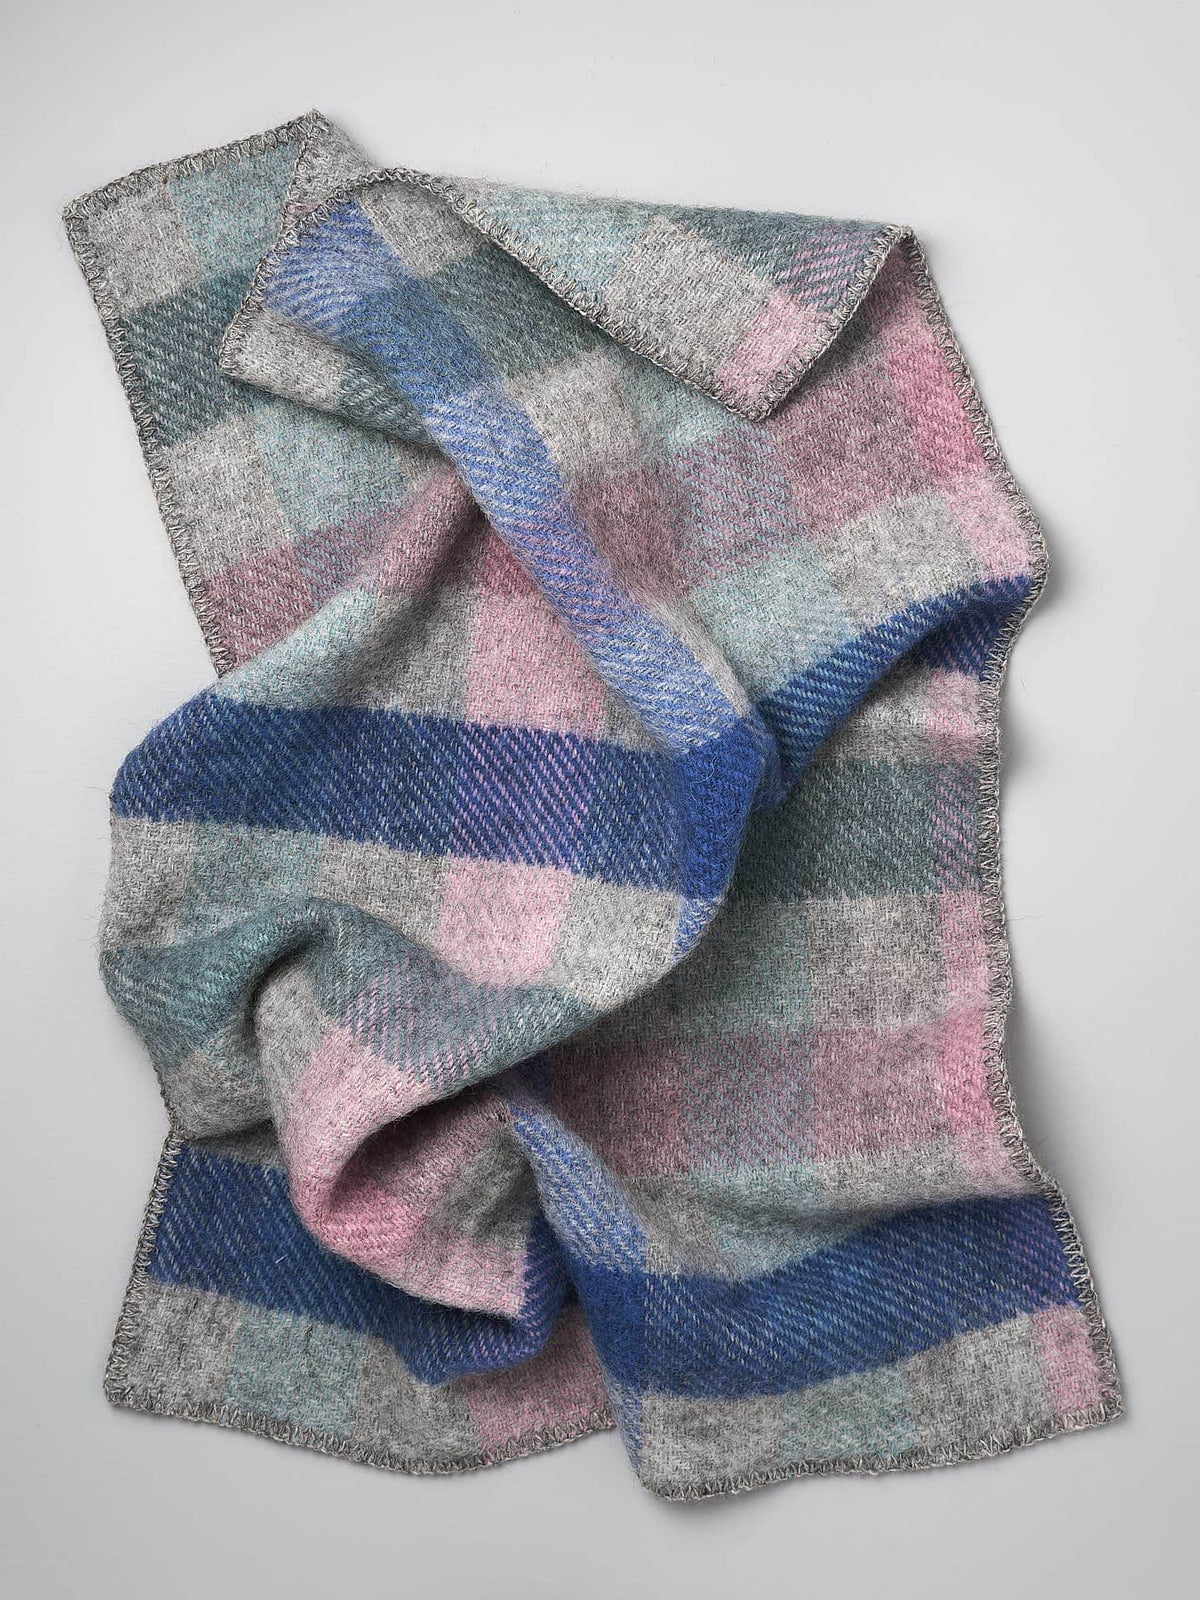 A Klippan Gotland Wool Baby Throw – Multi Pastel blanket on a grey surface.